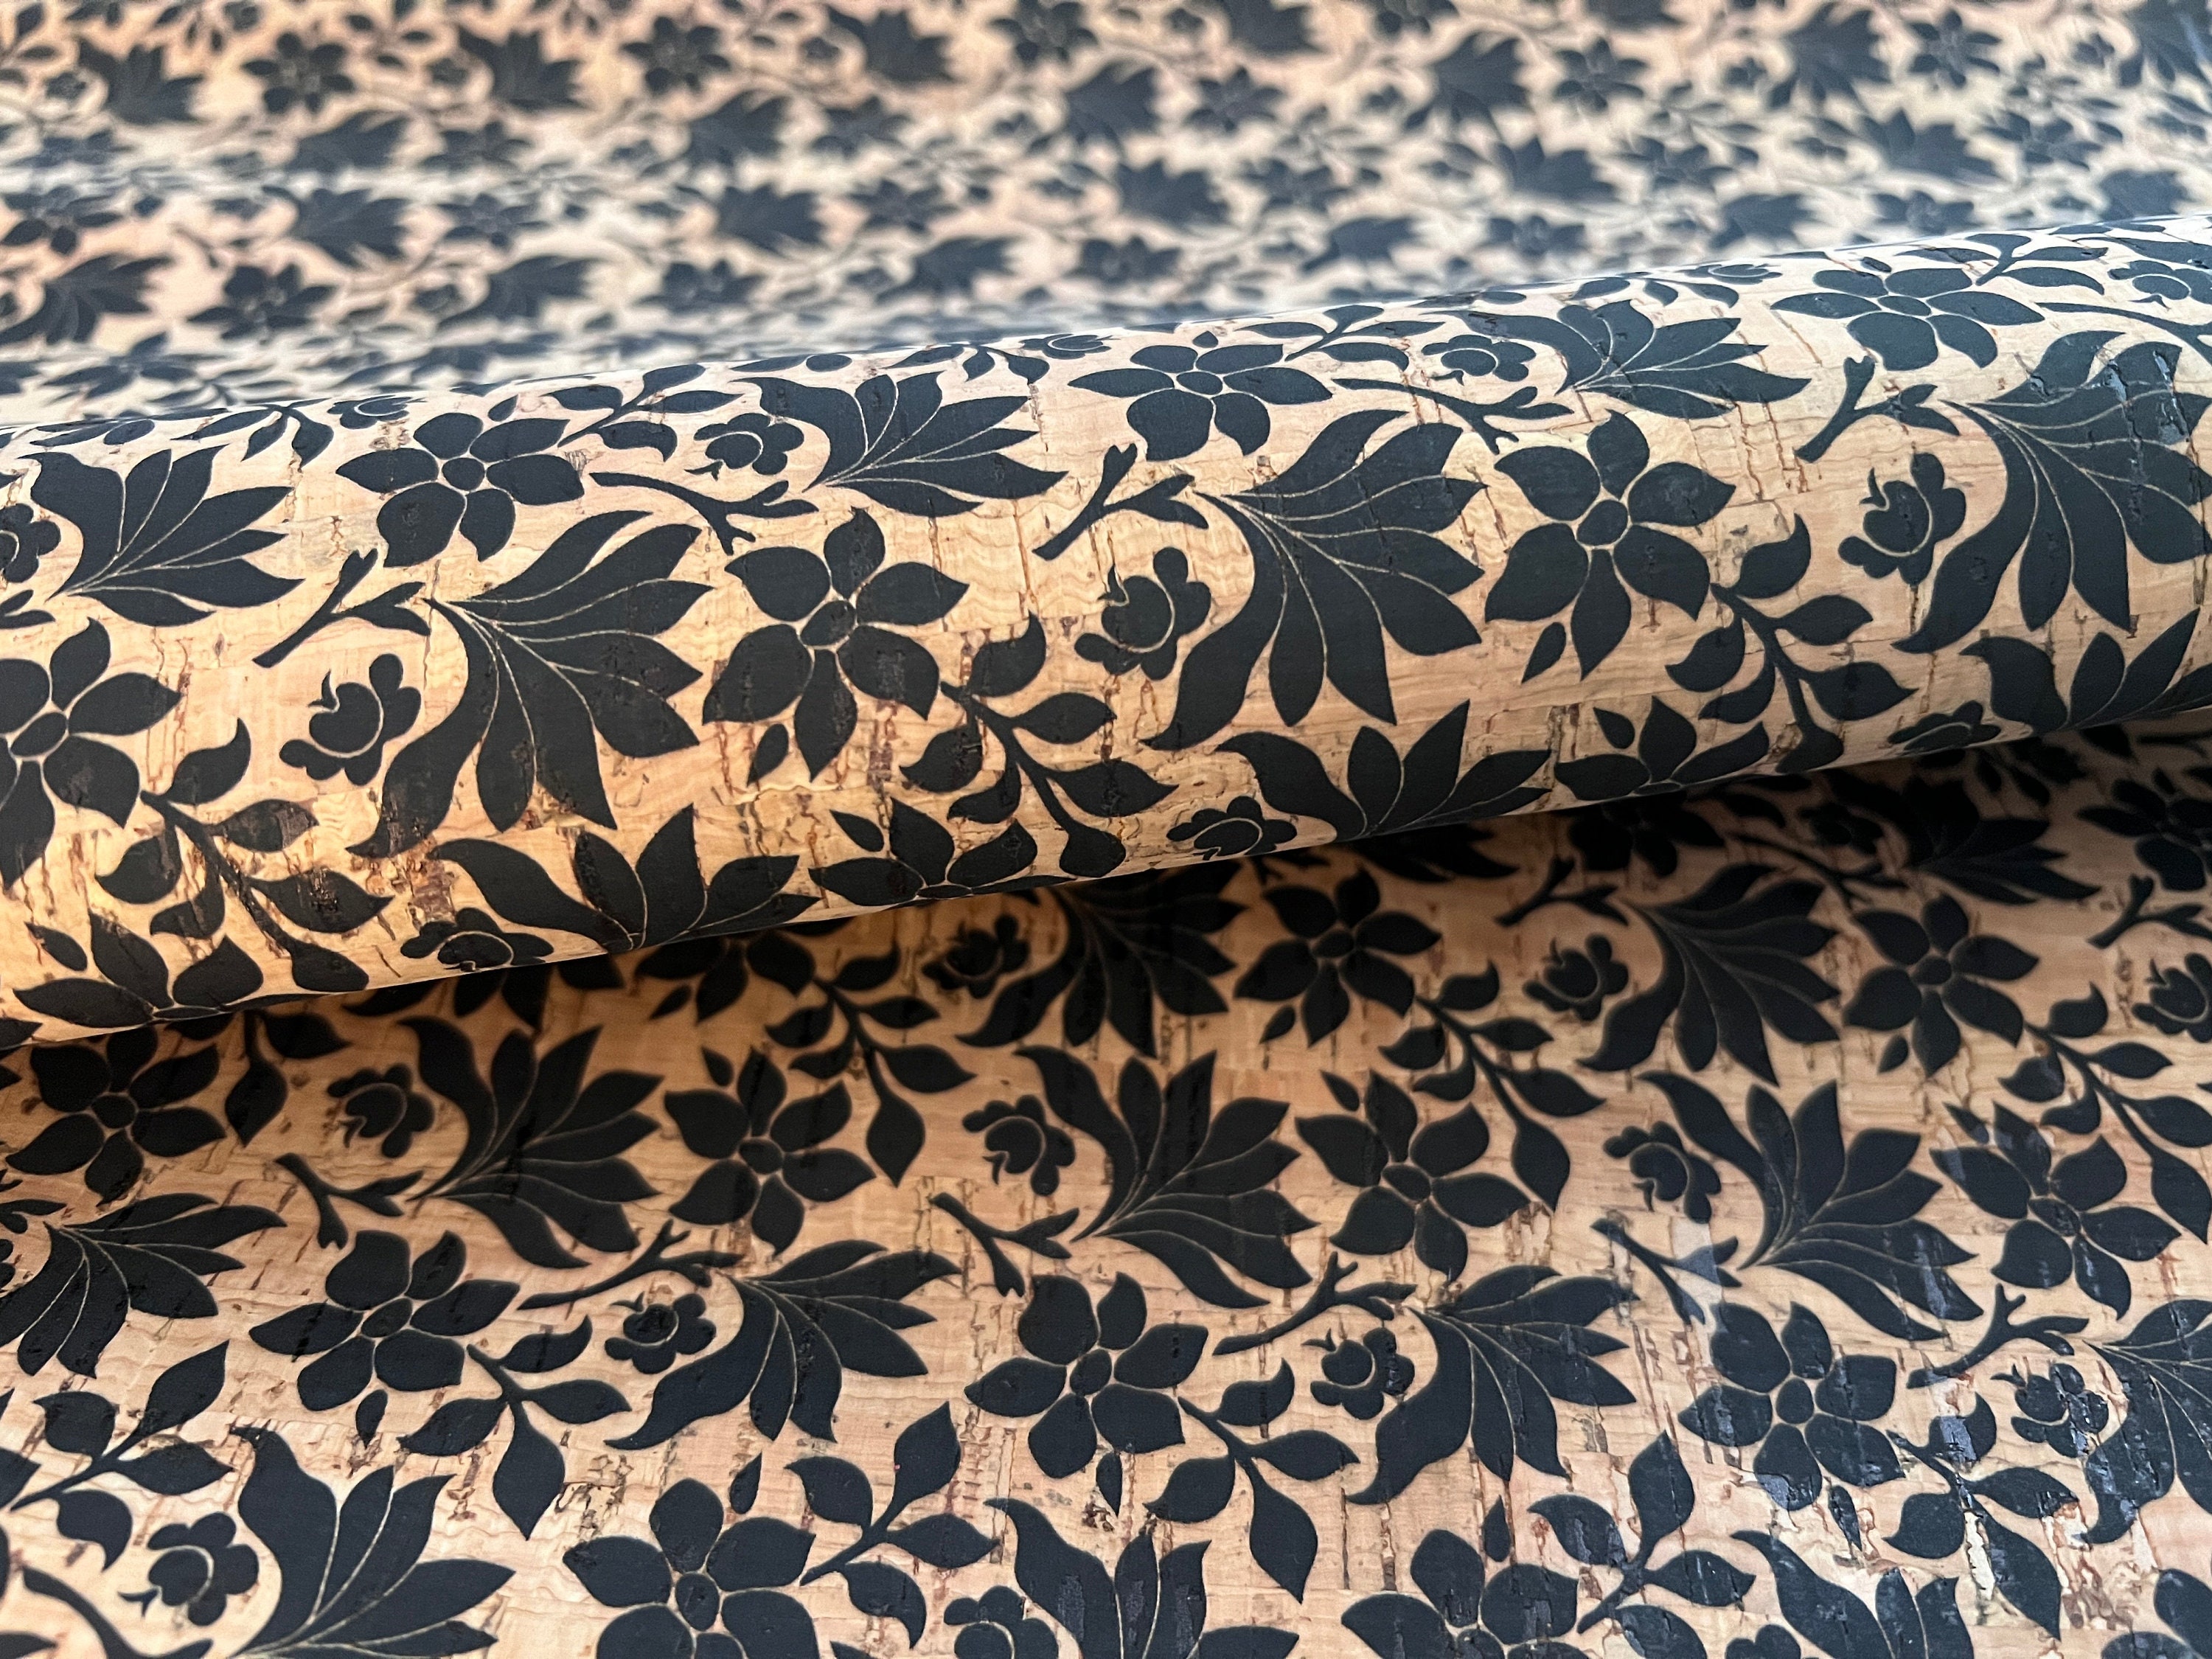 Printed Cork Fabric - Customized Cork Fabric Patterns - HZCORK